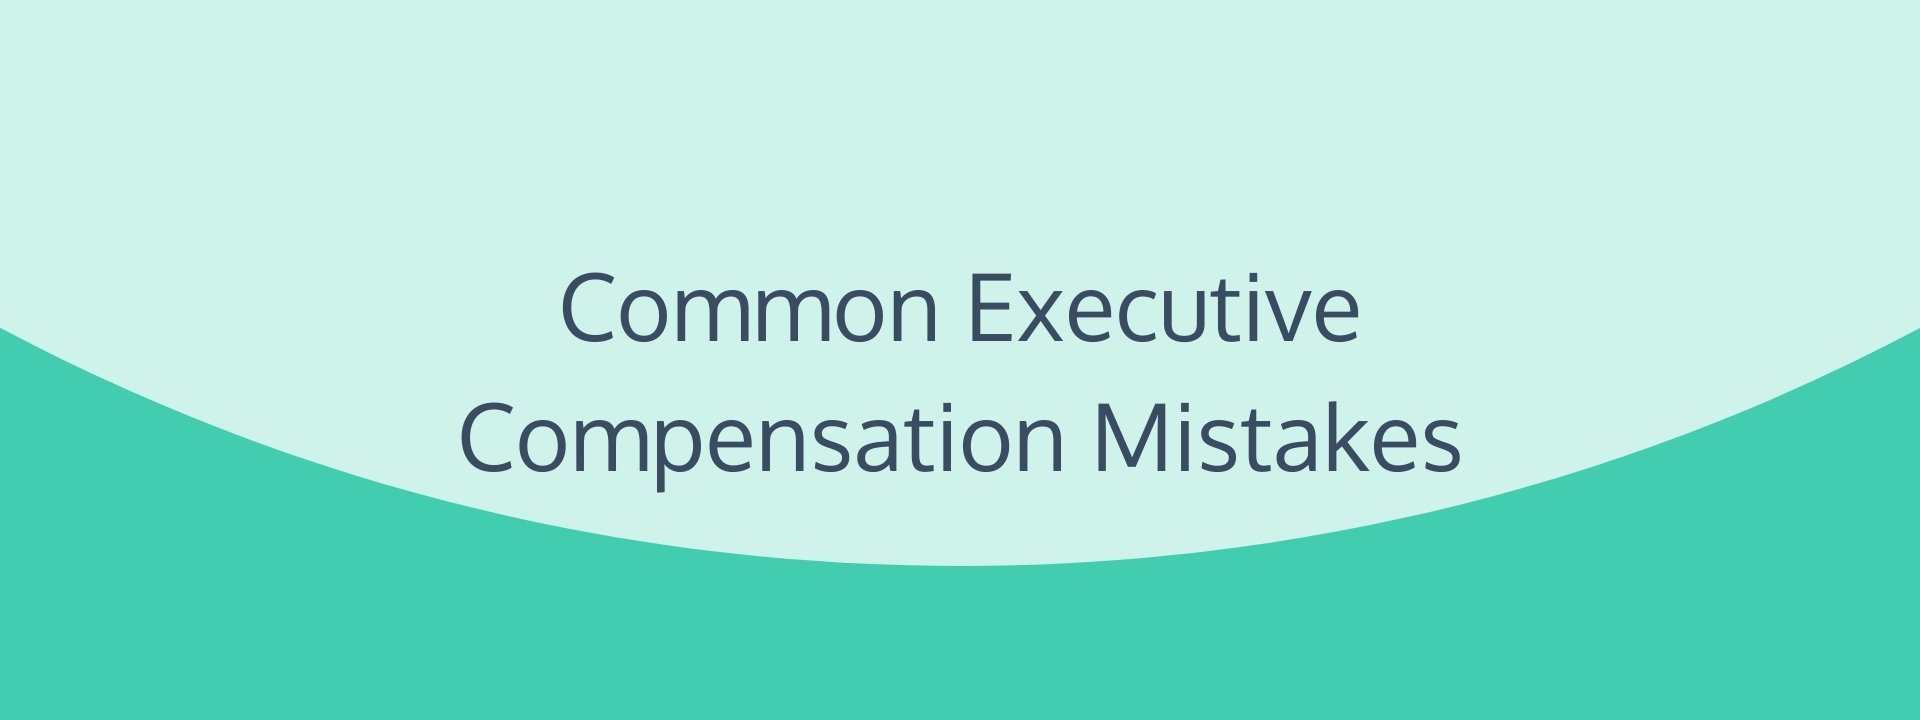 Common Executive Compensation Mistakes